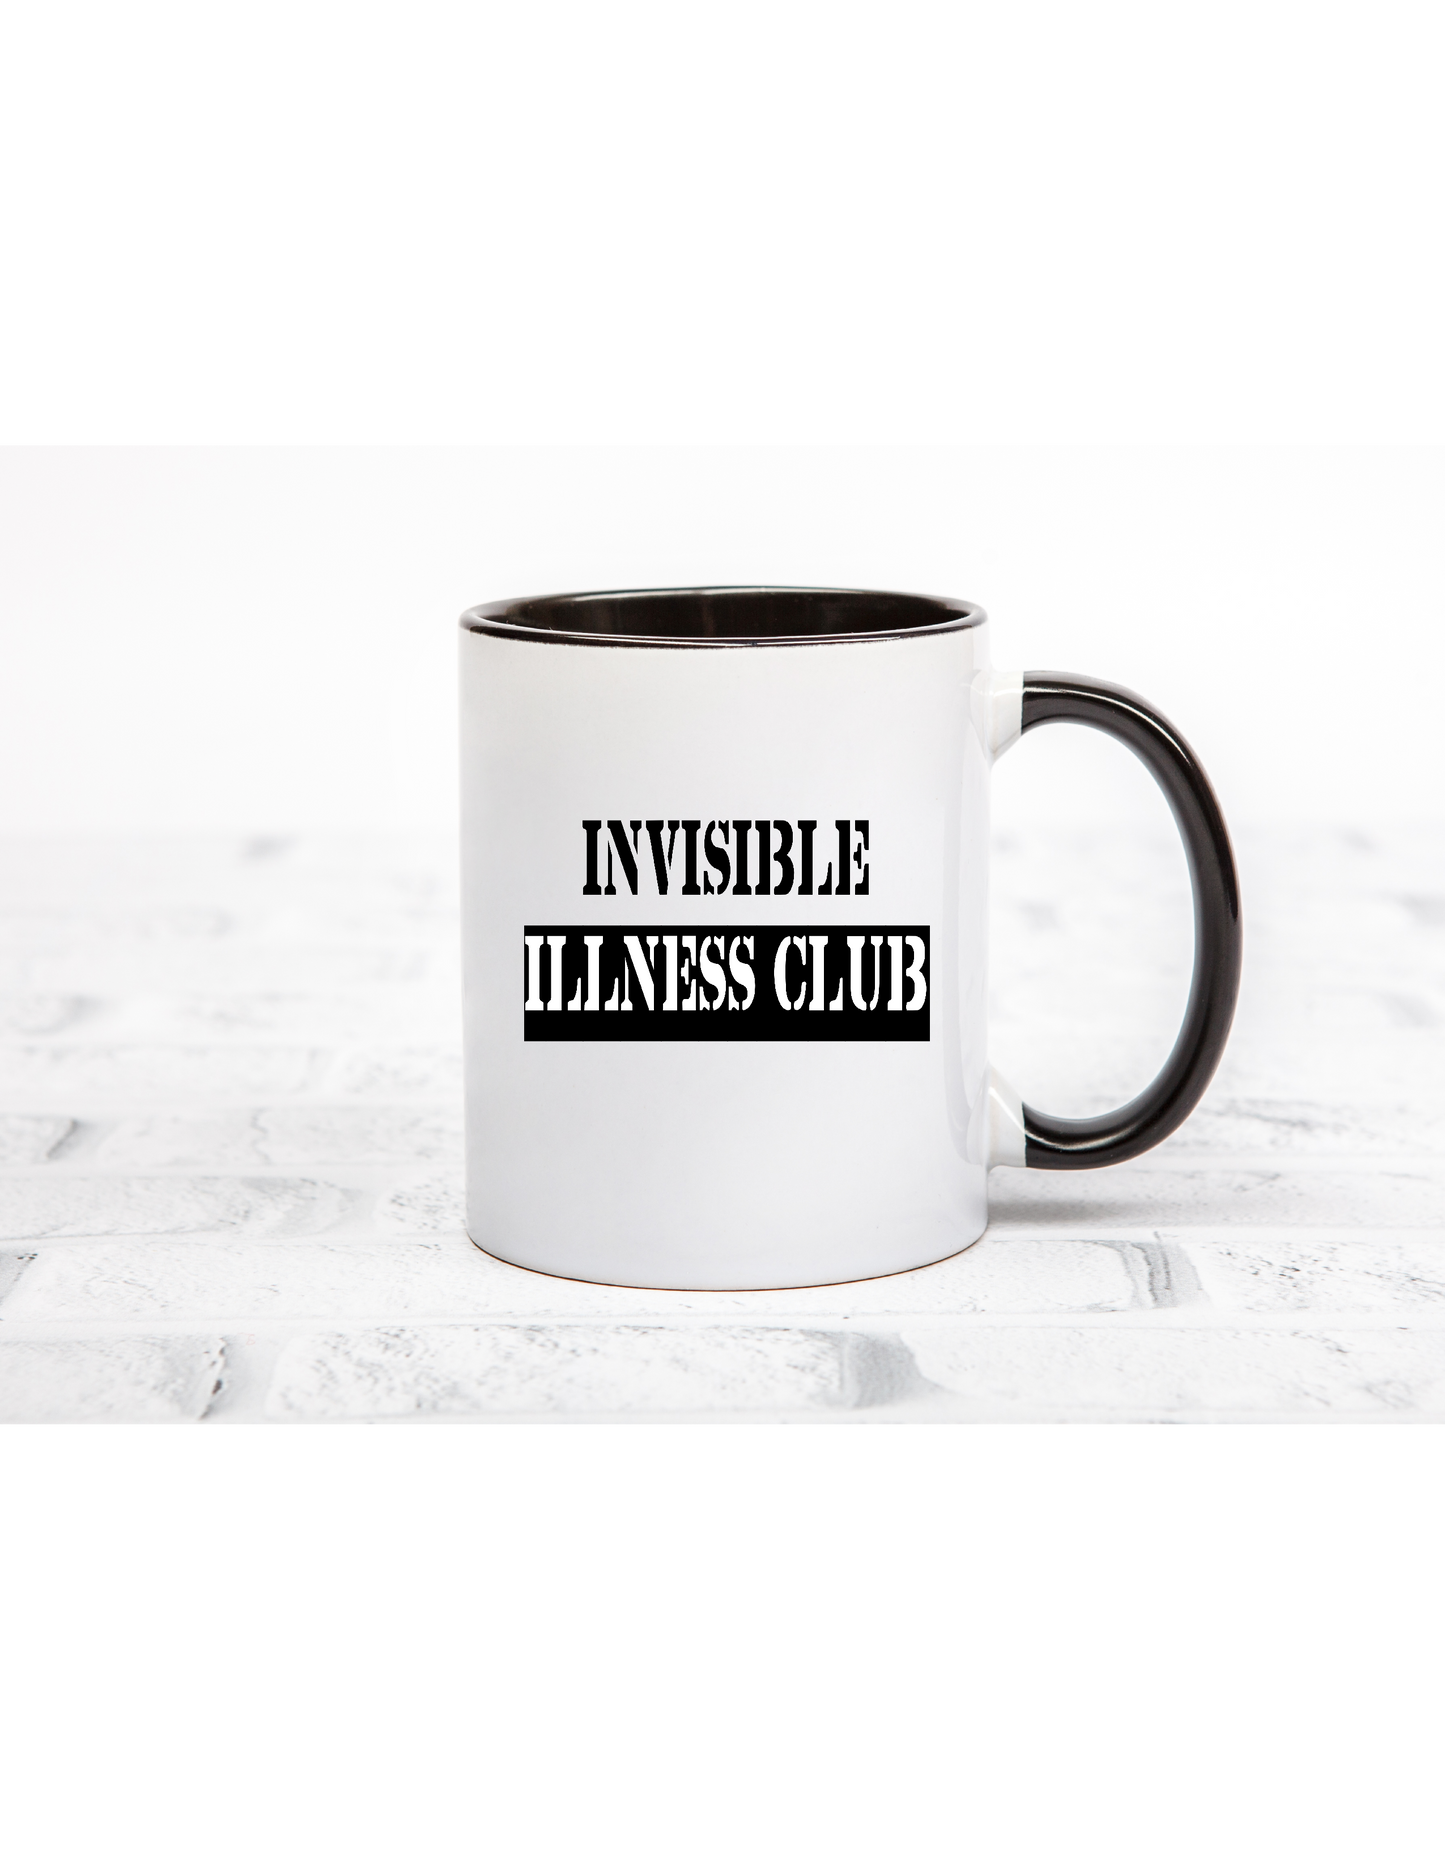 Invisible illness club Mug